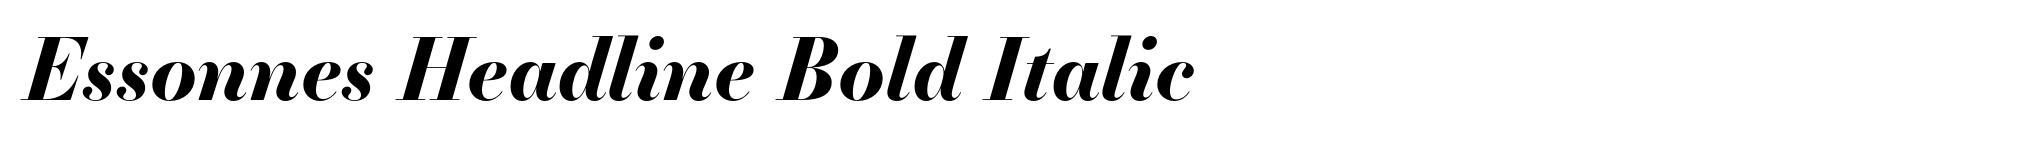 Essonnes Headline Bold Italic image